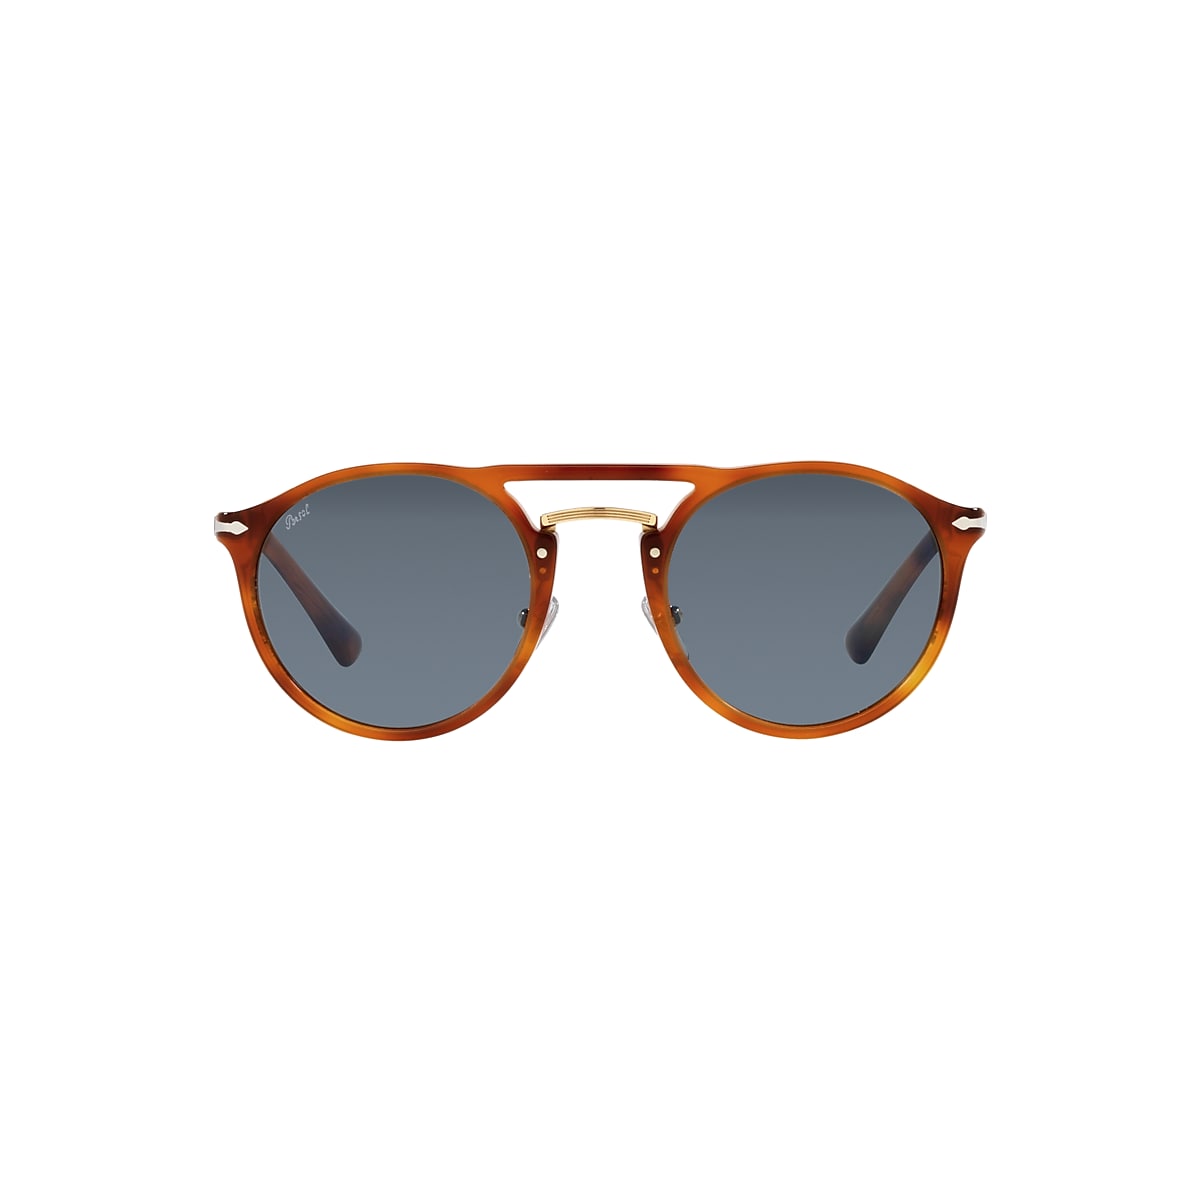 PERSOL PO3264S Terra Di Siena - Unisex Luxury Sunglasses, Light Blue Lens